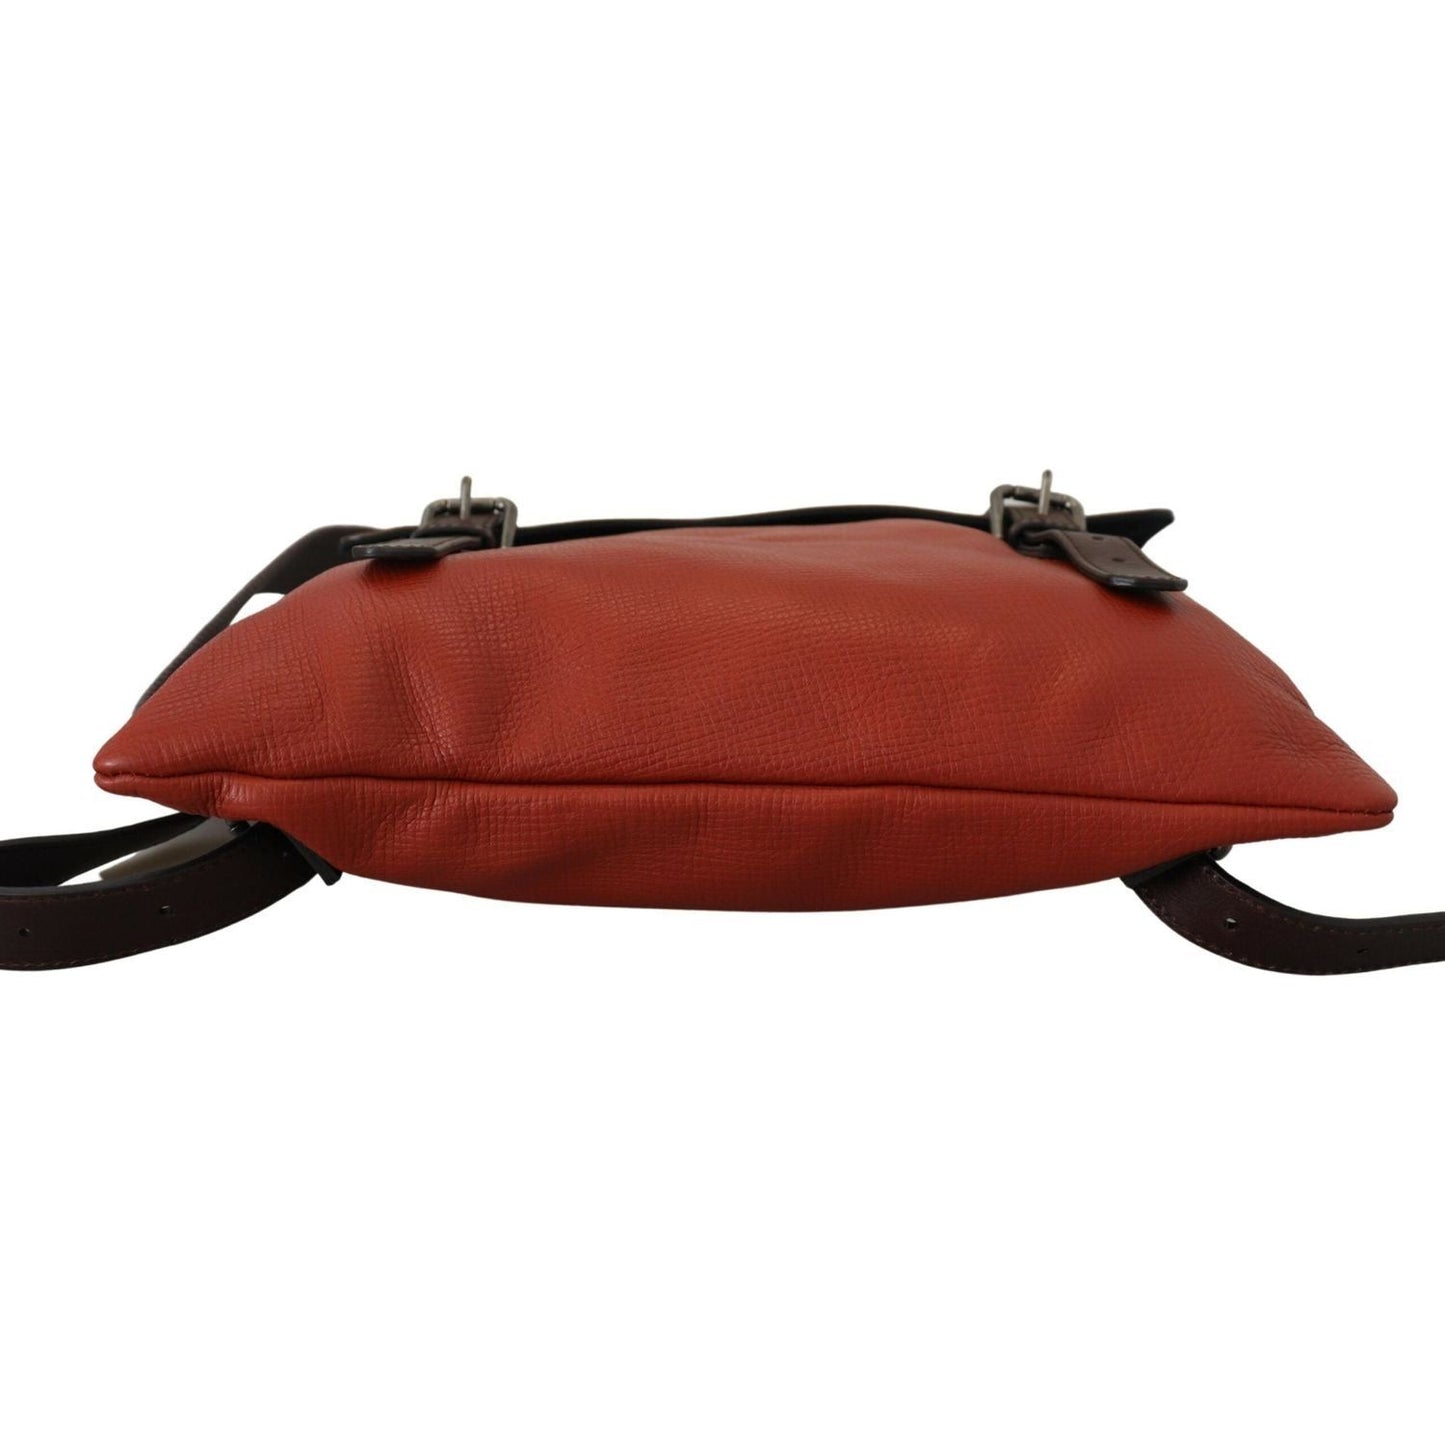 Dolce & GabbanaElegant Calfskin Leather Backpack in OrangeMcRichard Designer Brands£819.00